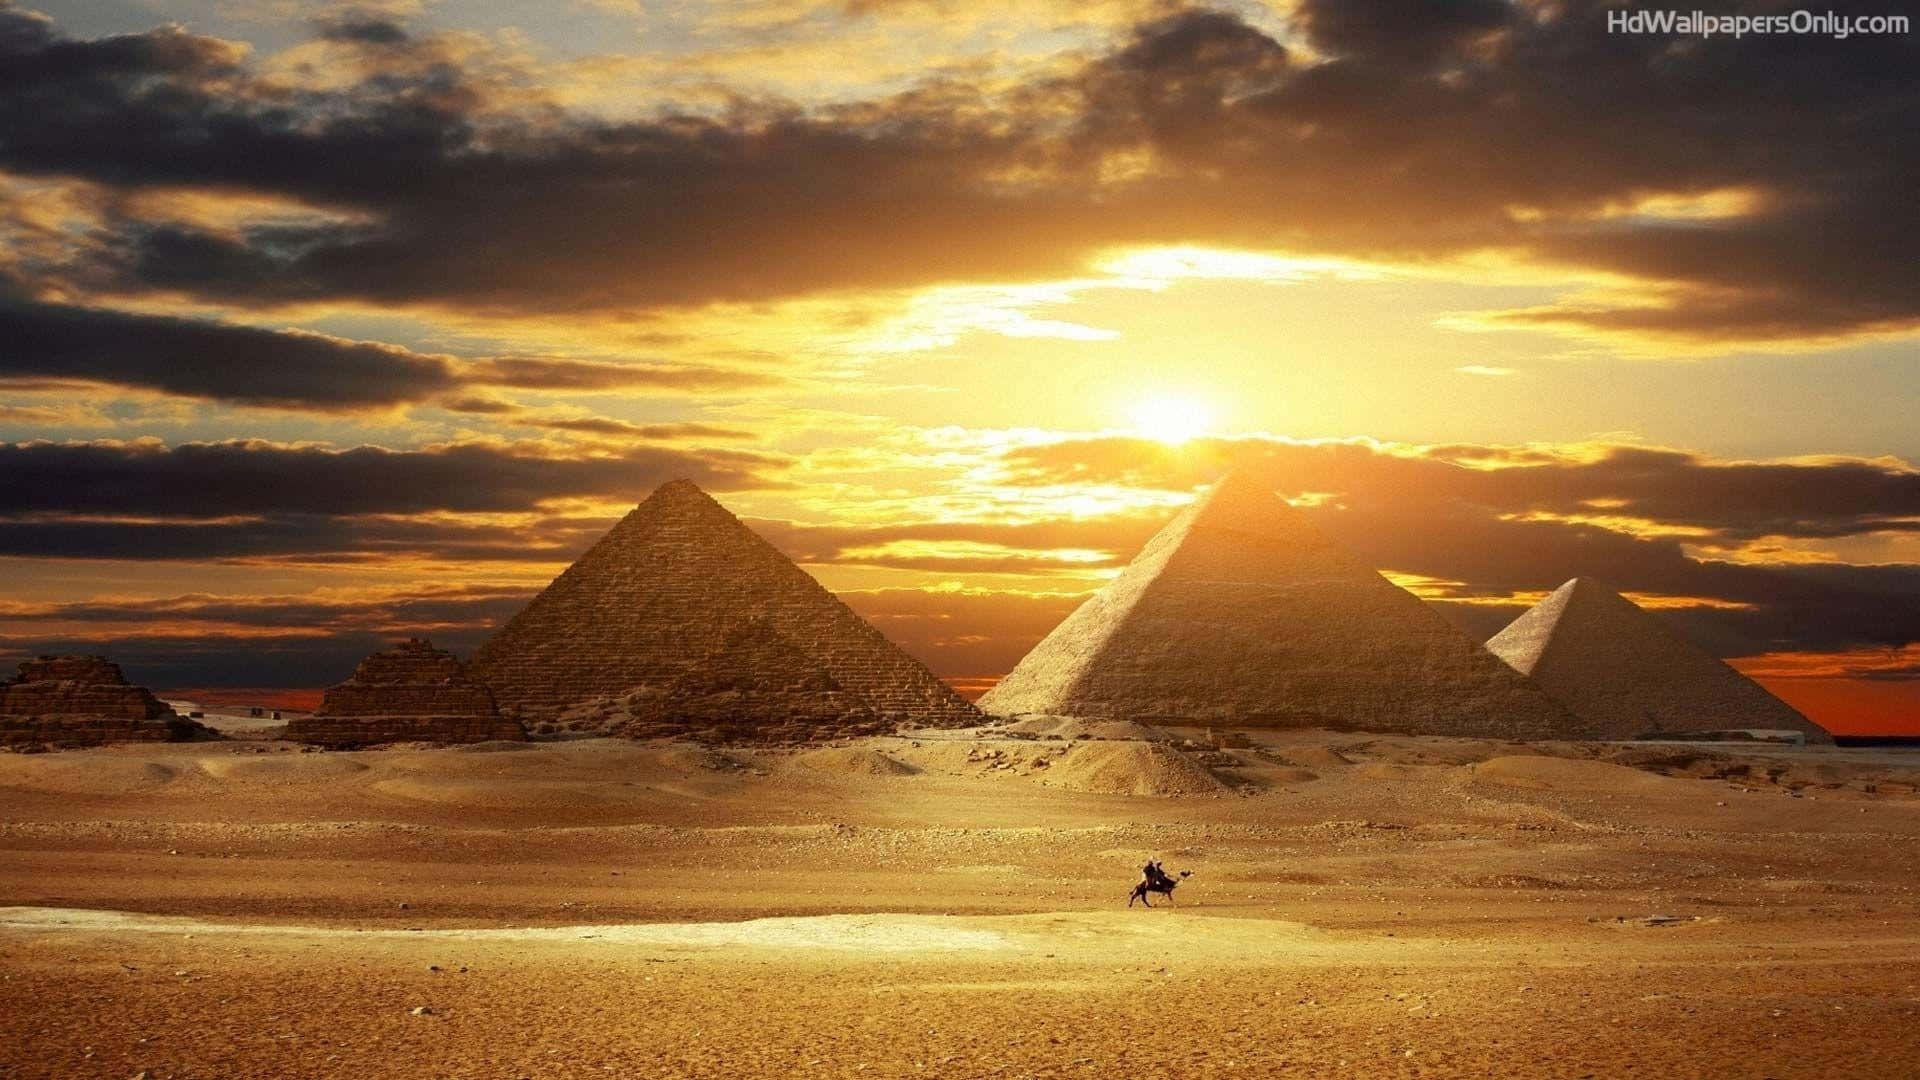 Enmand Står Foran Pyramiderne Ved Solnedgang. Wallpaper